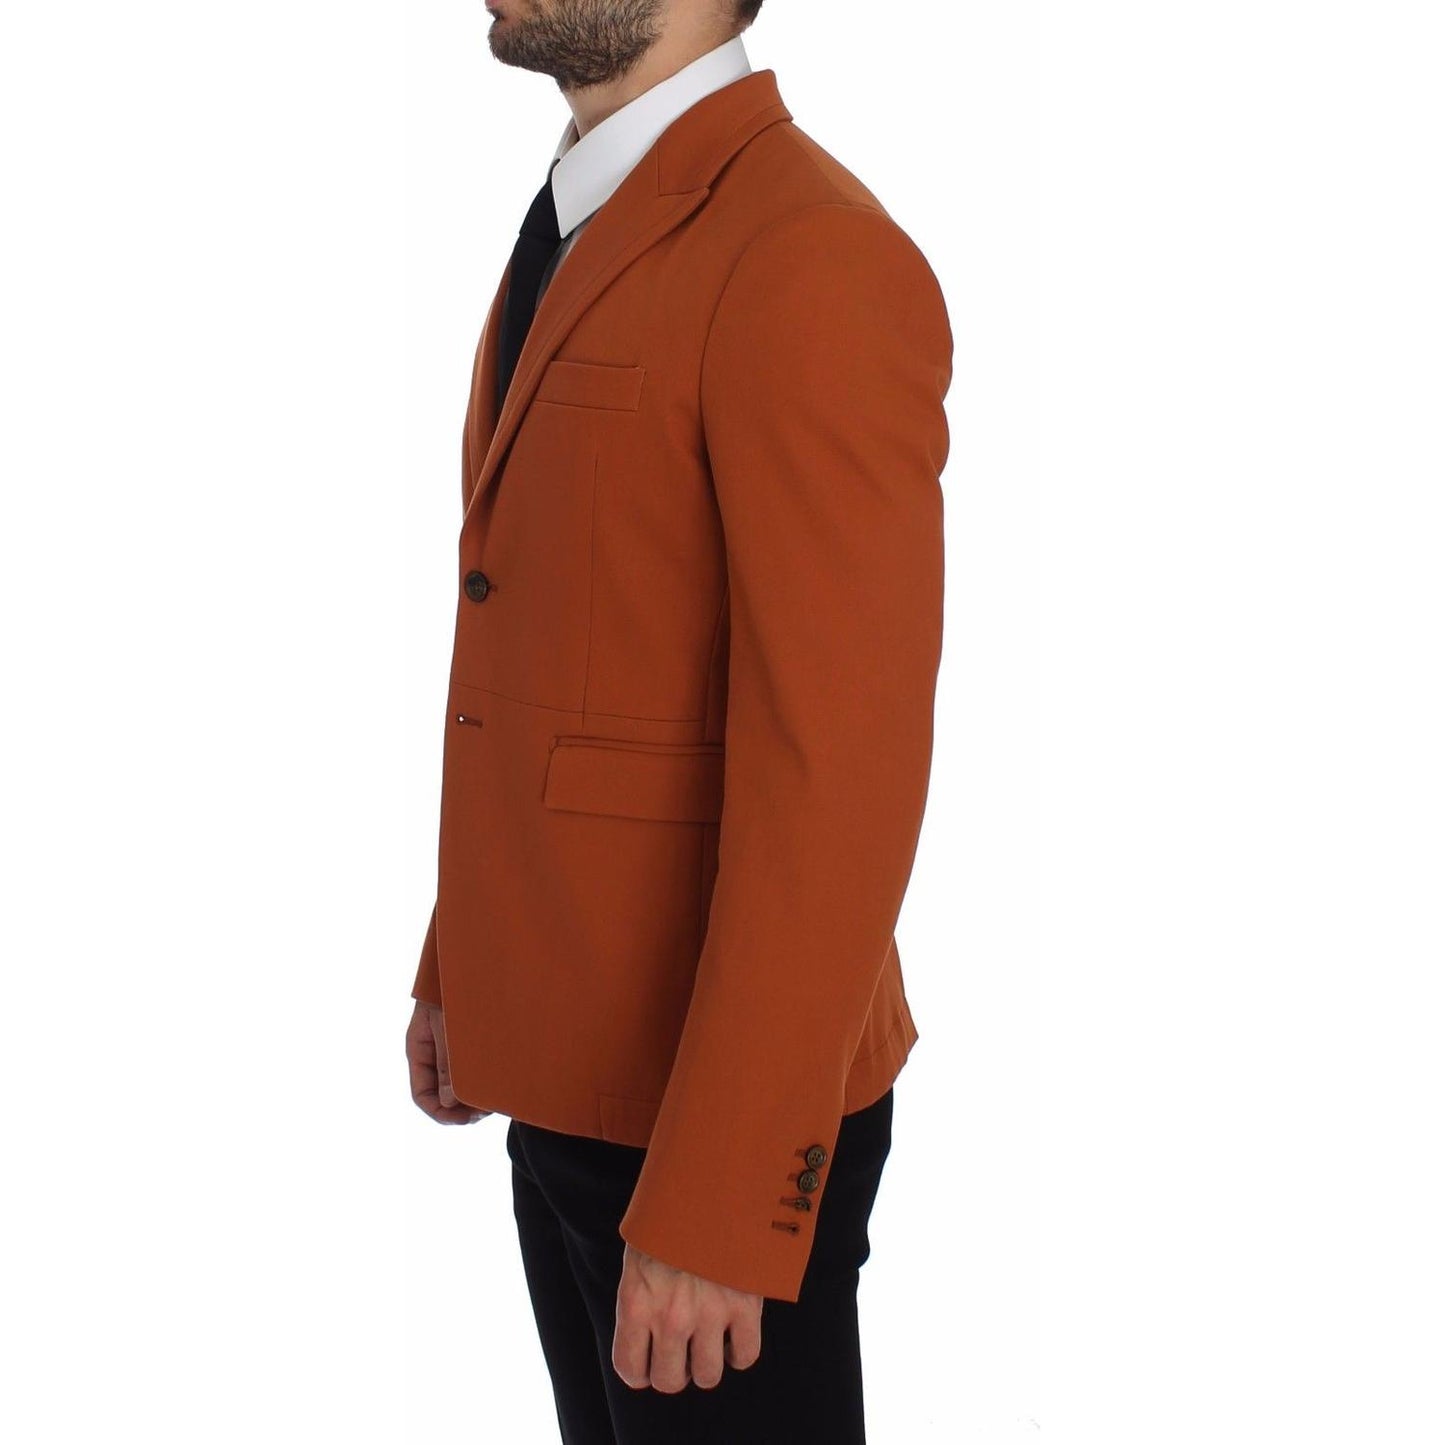 Dolce & Gabbana Orange Cotton Stretch Blazer orange-cotton-stretch-blazer 47026-orange-cotton-stretch-blazer-2_c71e8964-11c2-4516-9ba9-e0f8facb2c5a.jpg